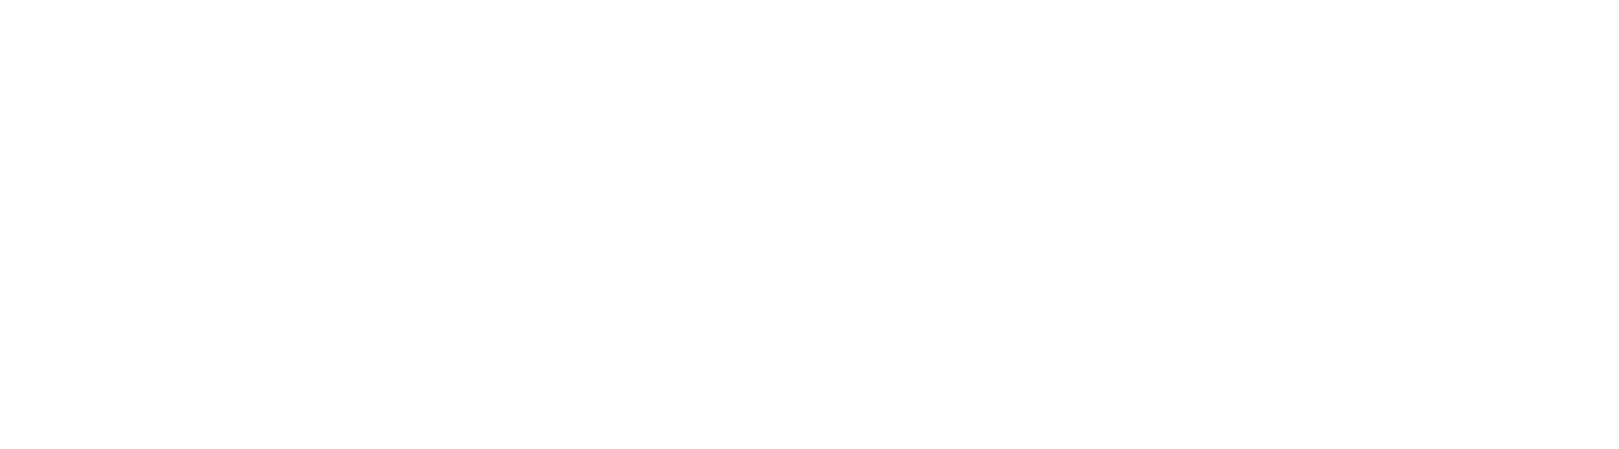 Franklin Cafe Cape Ann Home